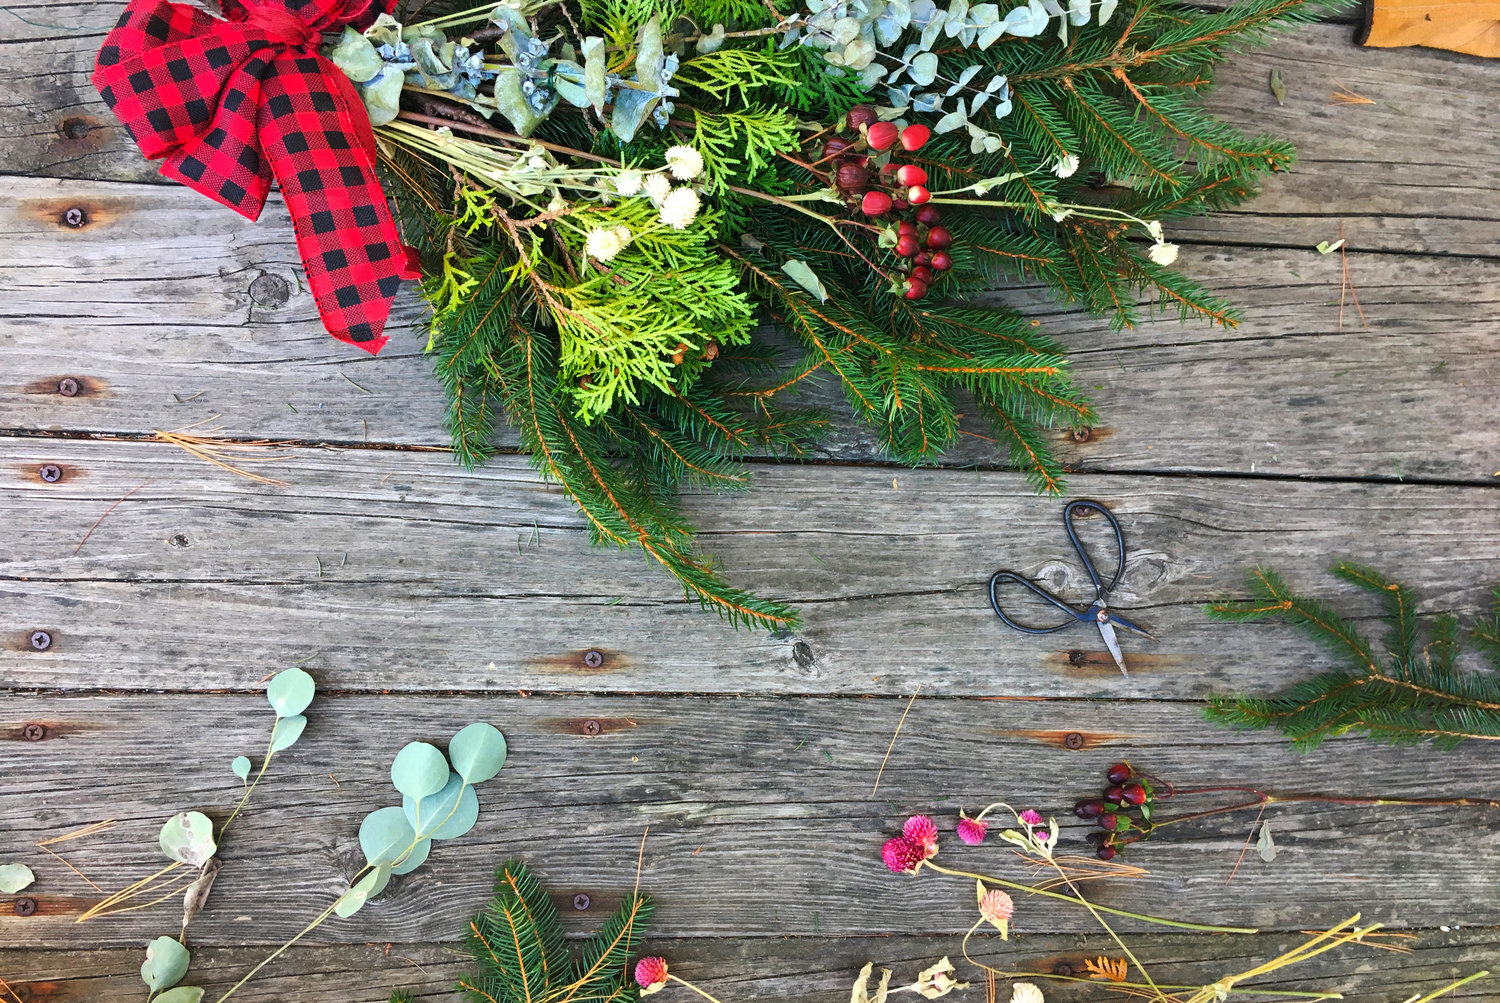 Christmas Wreath Workshop
Tuesday, December 6
Narragansett Brewery